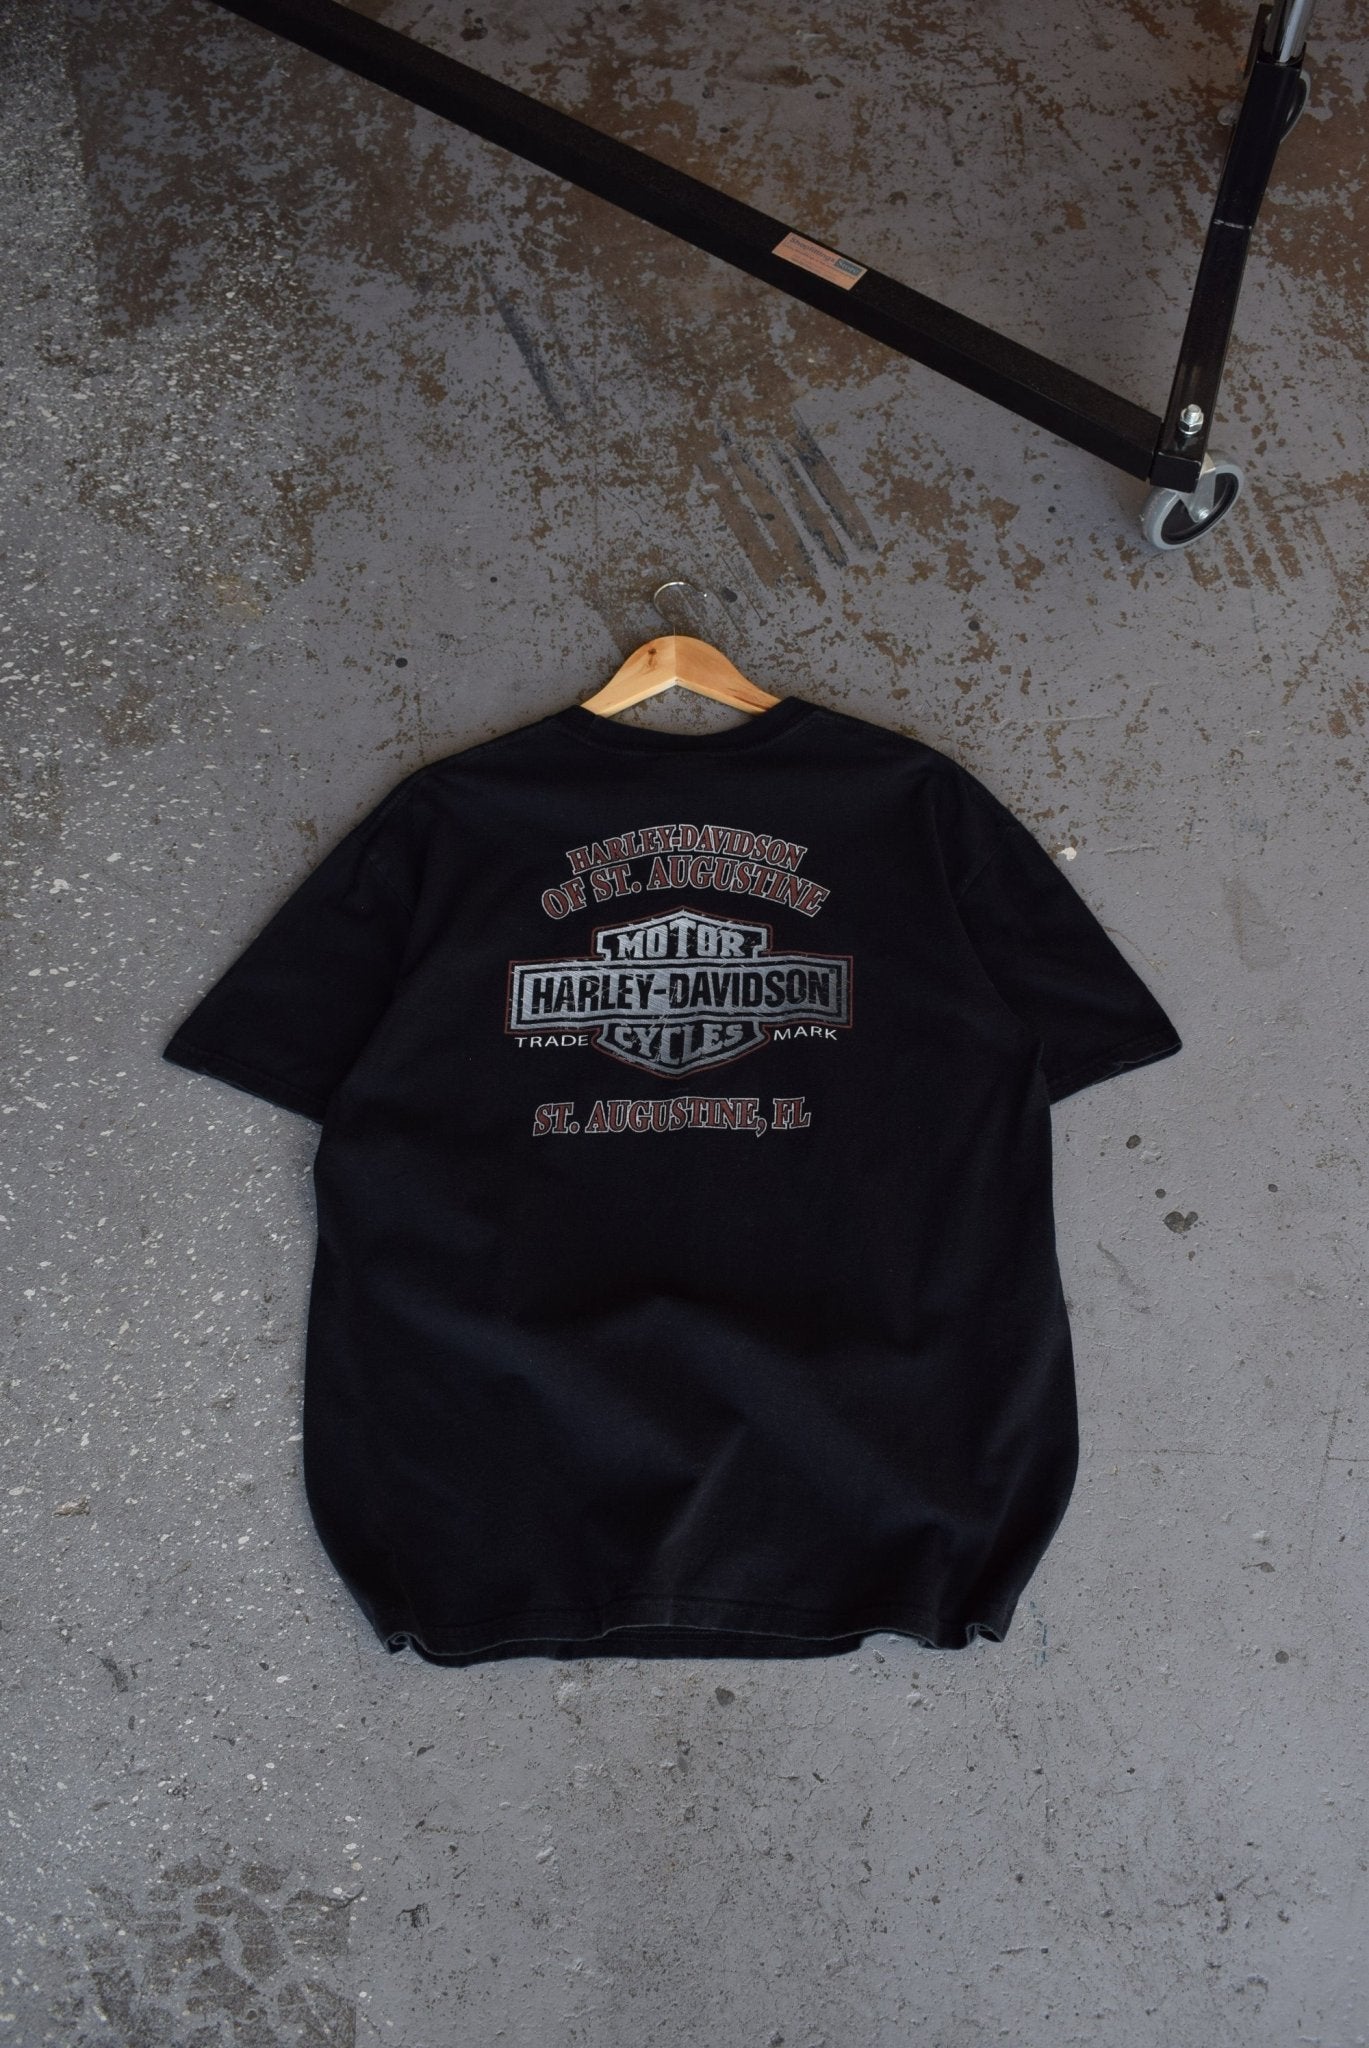 Vintage Harley Davidson Motorcycles Tee (XL) - Retrospective Store